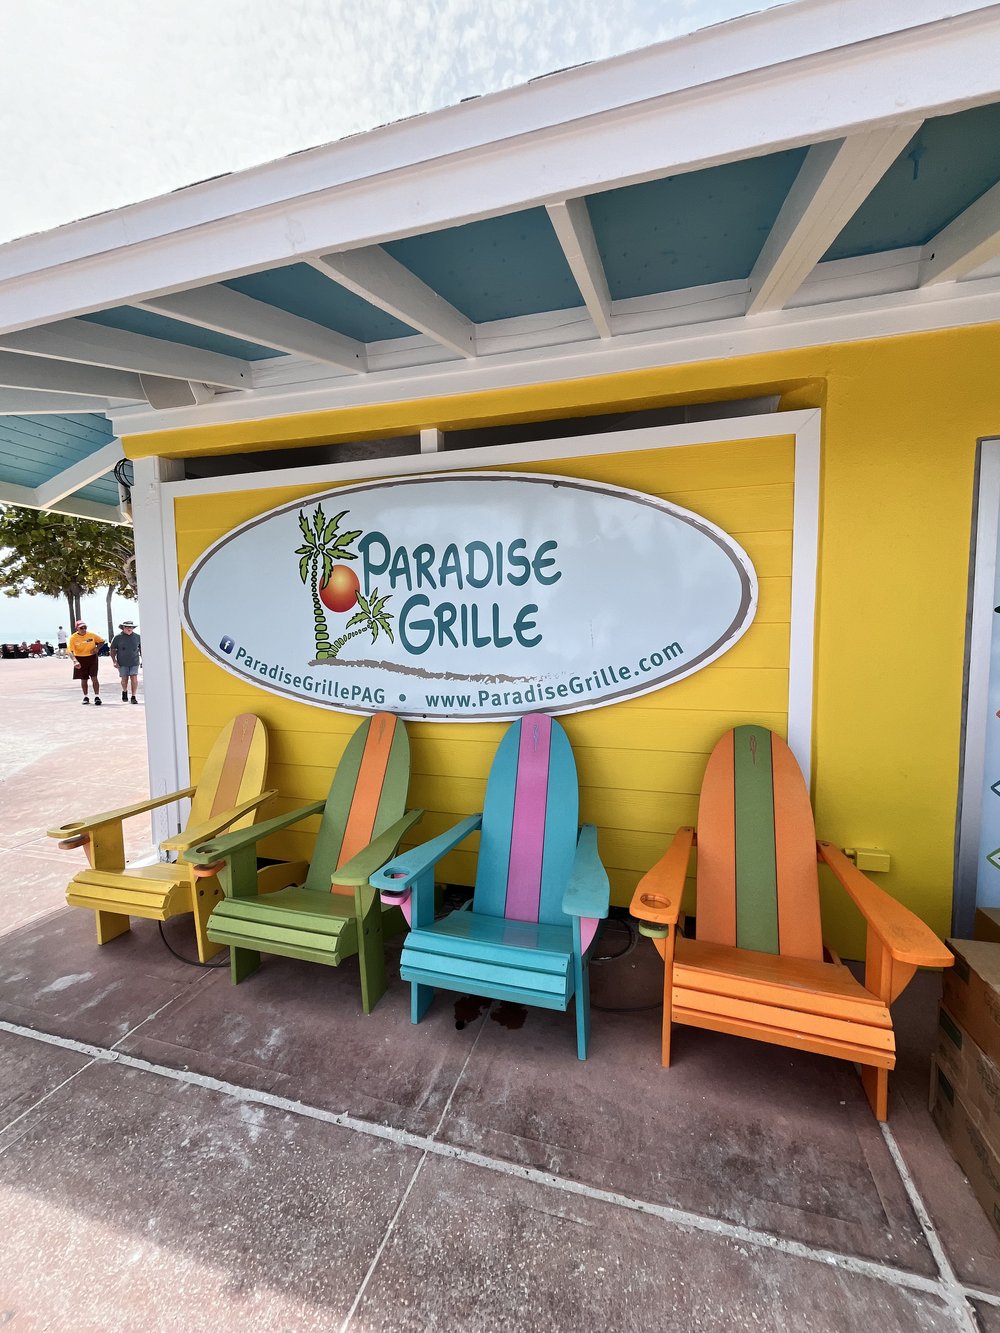 Pass-a-grille chairs St Pete beach Florida.jpg